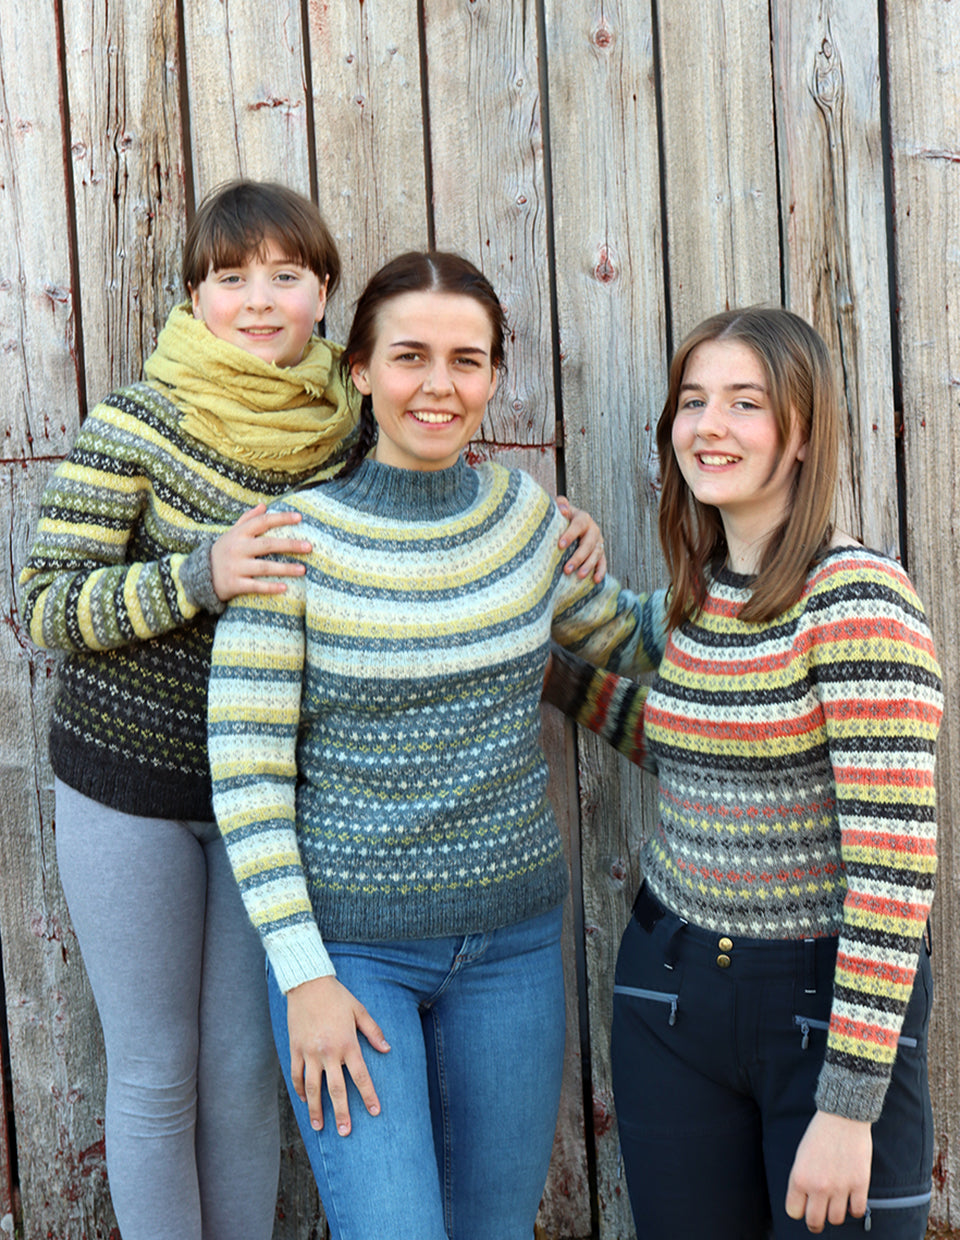 Stripestjerne genser, 2-trådet, strikkepakke